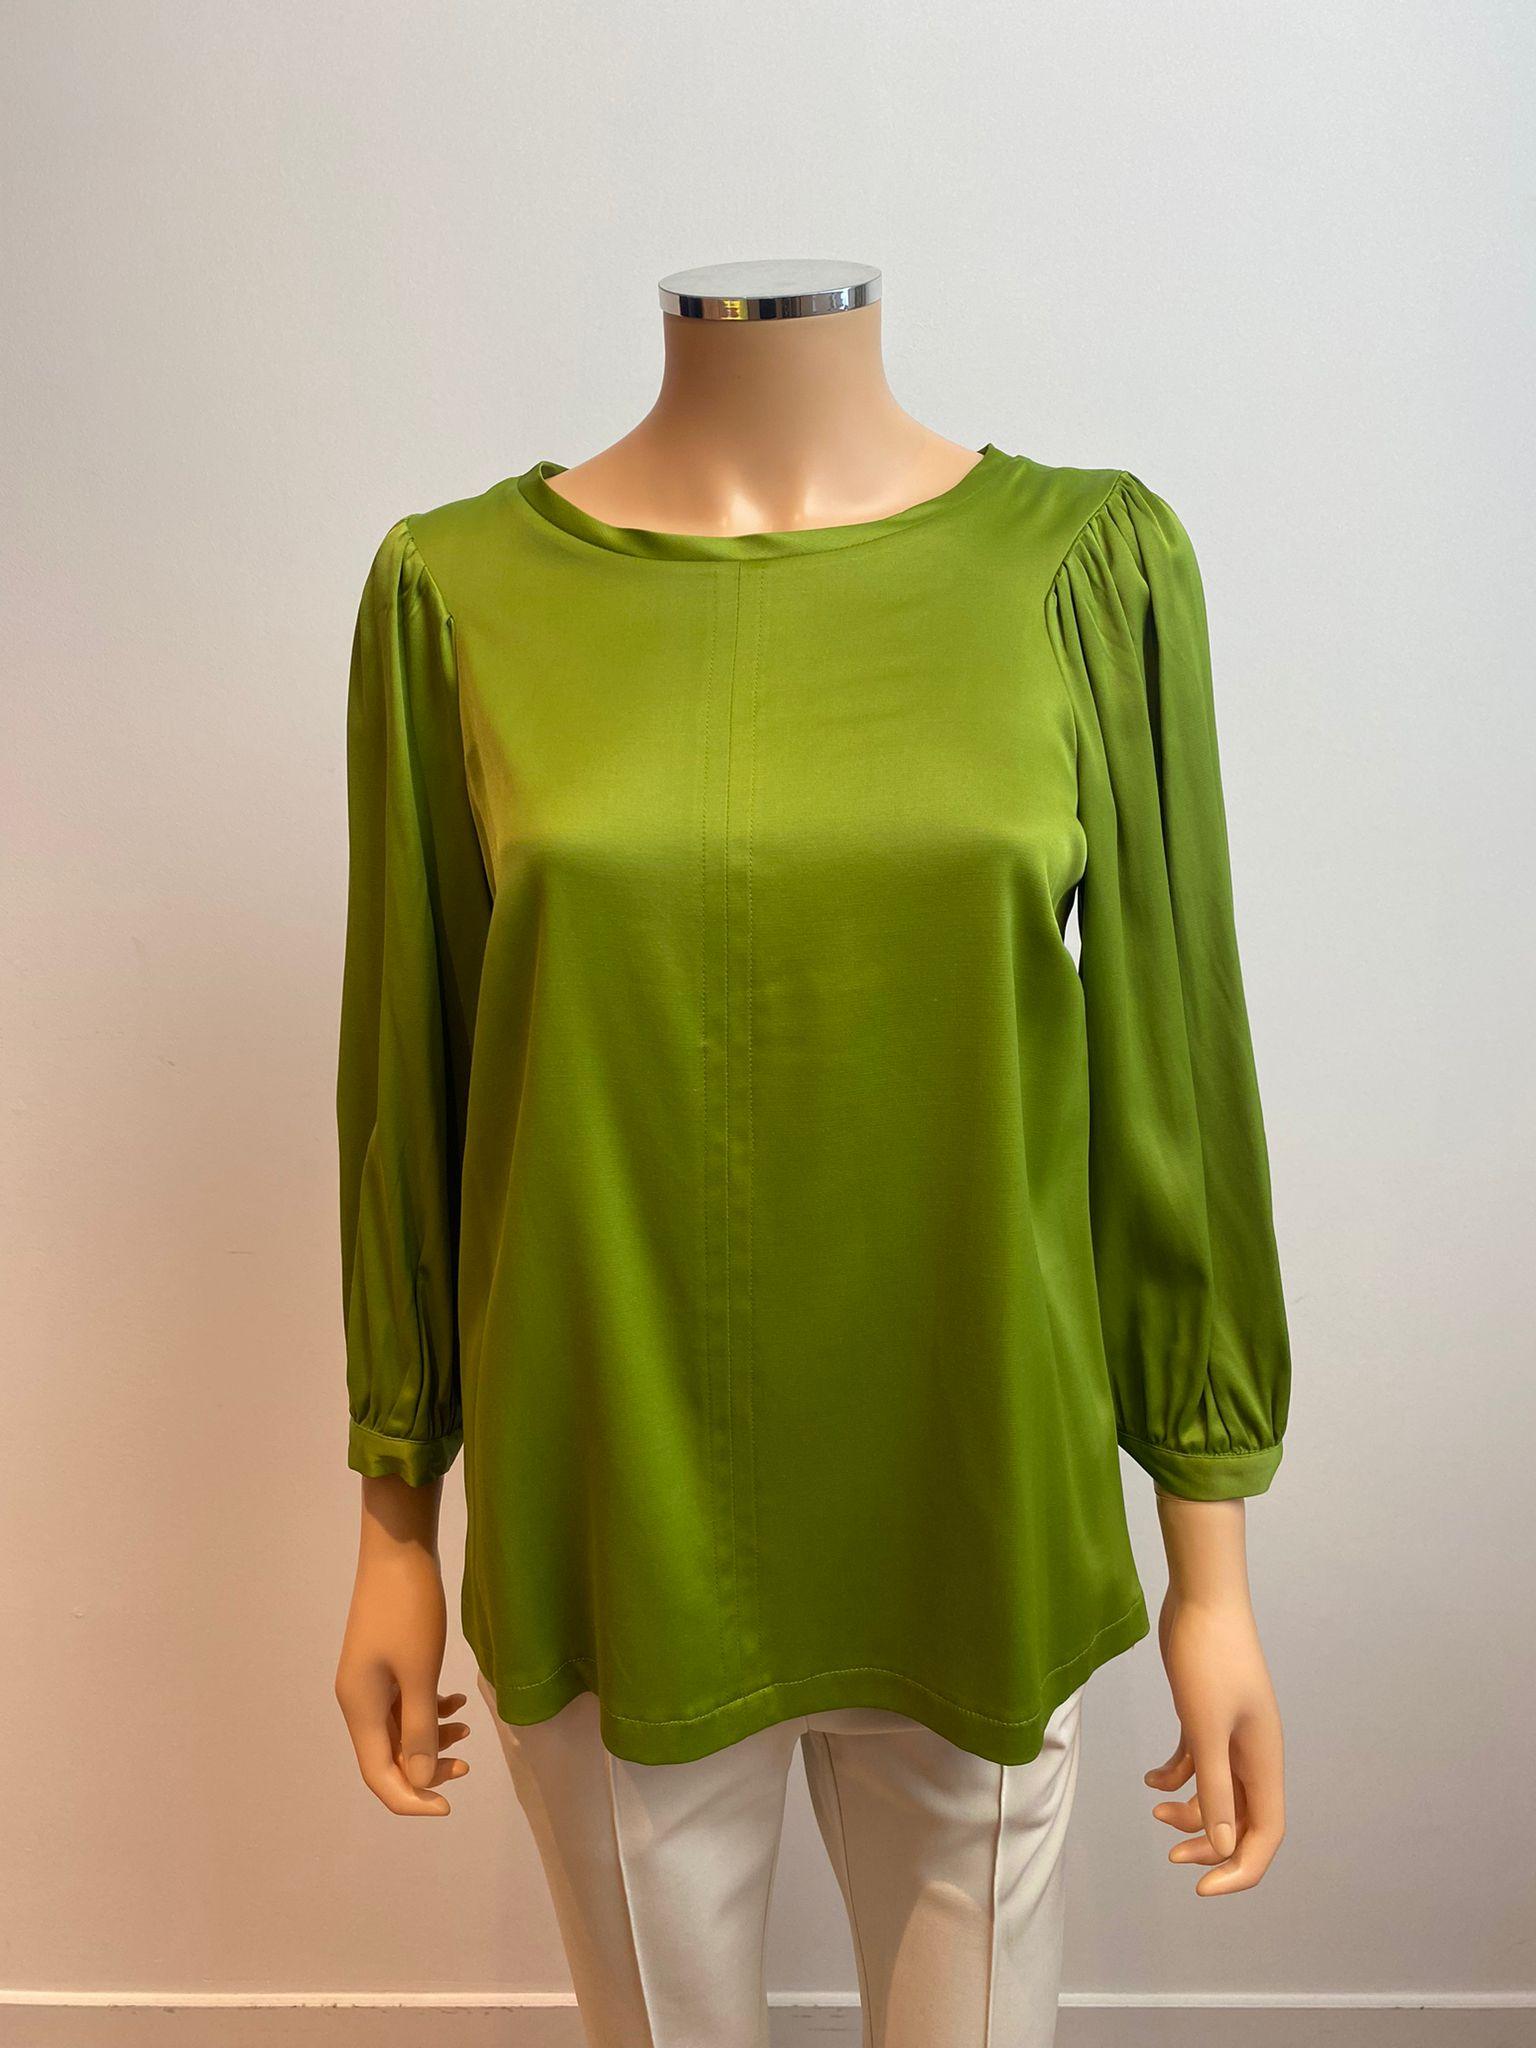 Bloes Groen Atmos Fashion ( 9280 Betha Moss ) - Delaere Womenswear